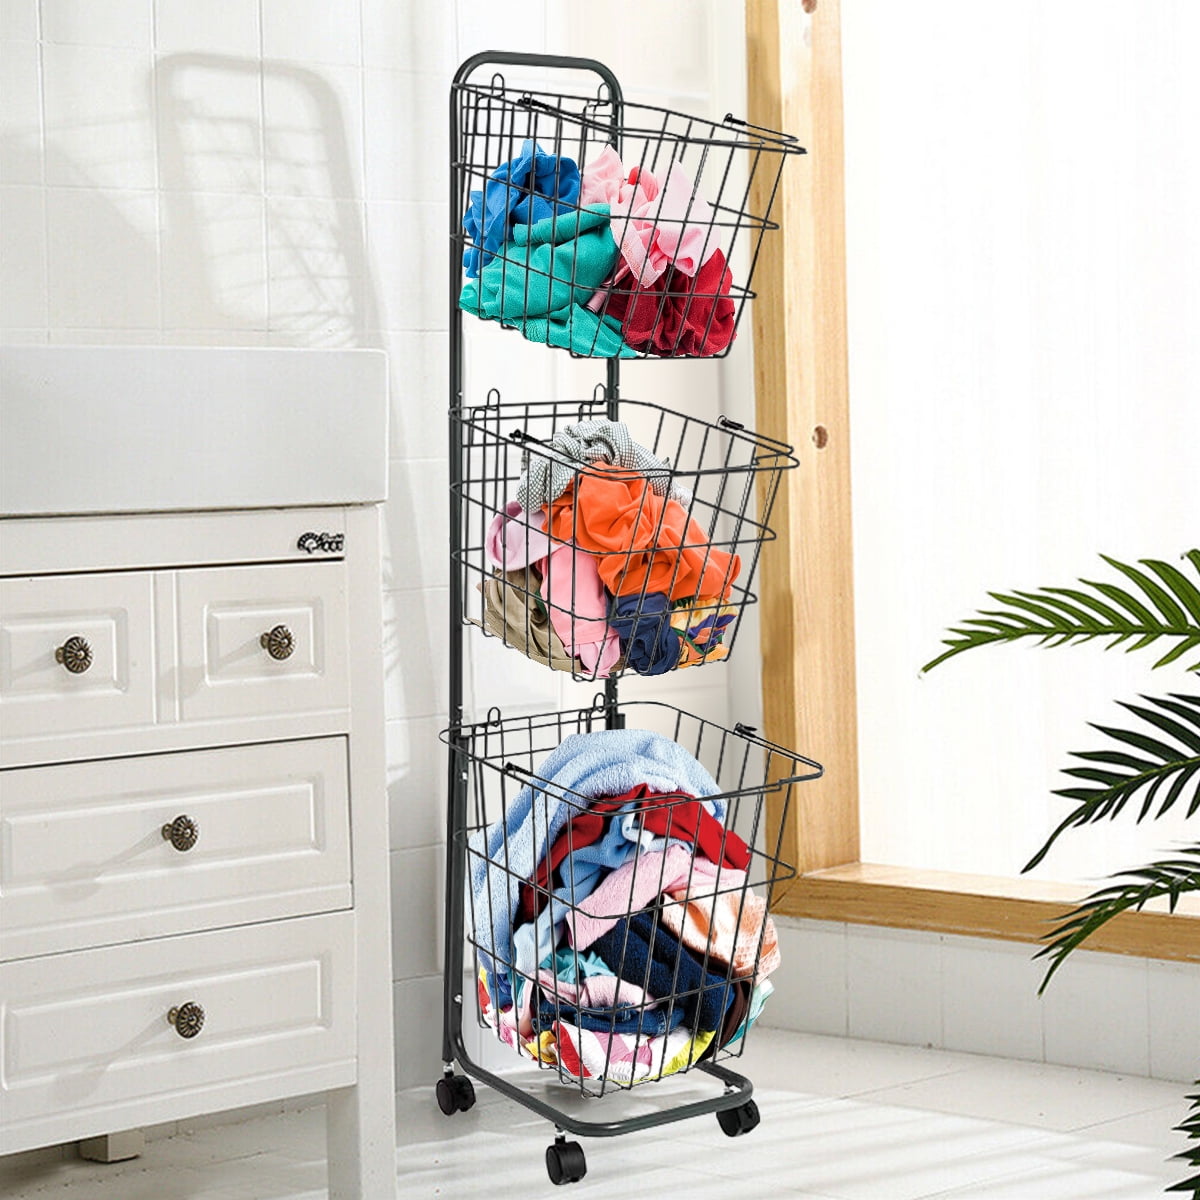 Steele 2.5-Bushel Canvas Vertical Laundry Bin + Reviews